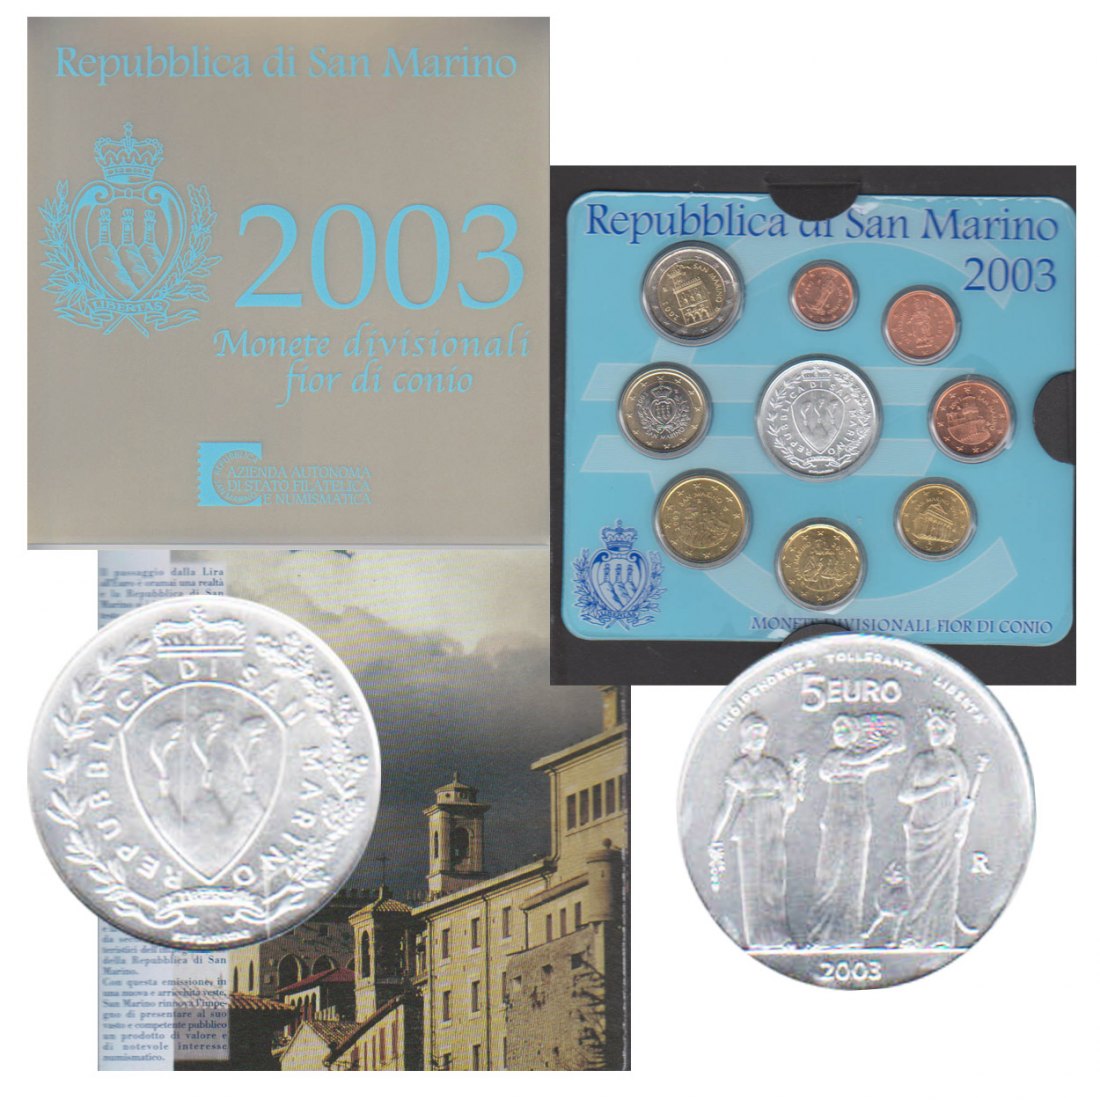  Offiz. Euro-KMS San Marino *1700 Jahre Republik San Marino* 2003 mit 5-Euro-Silbermünze   